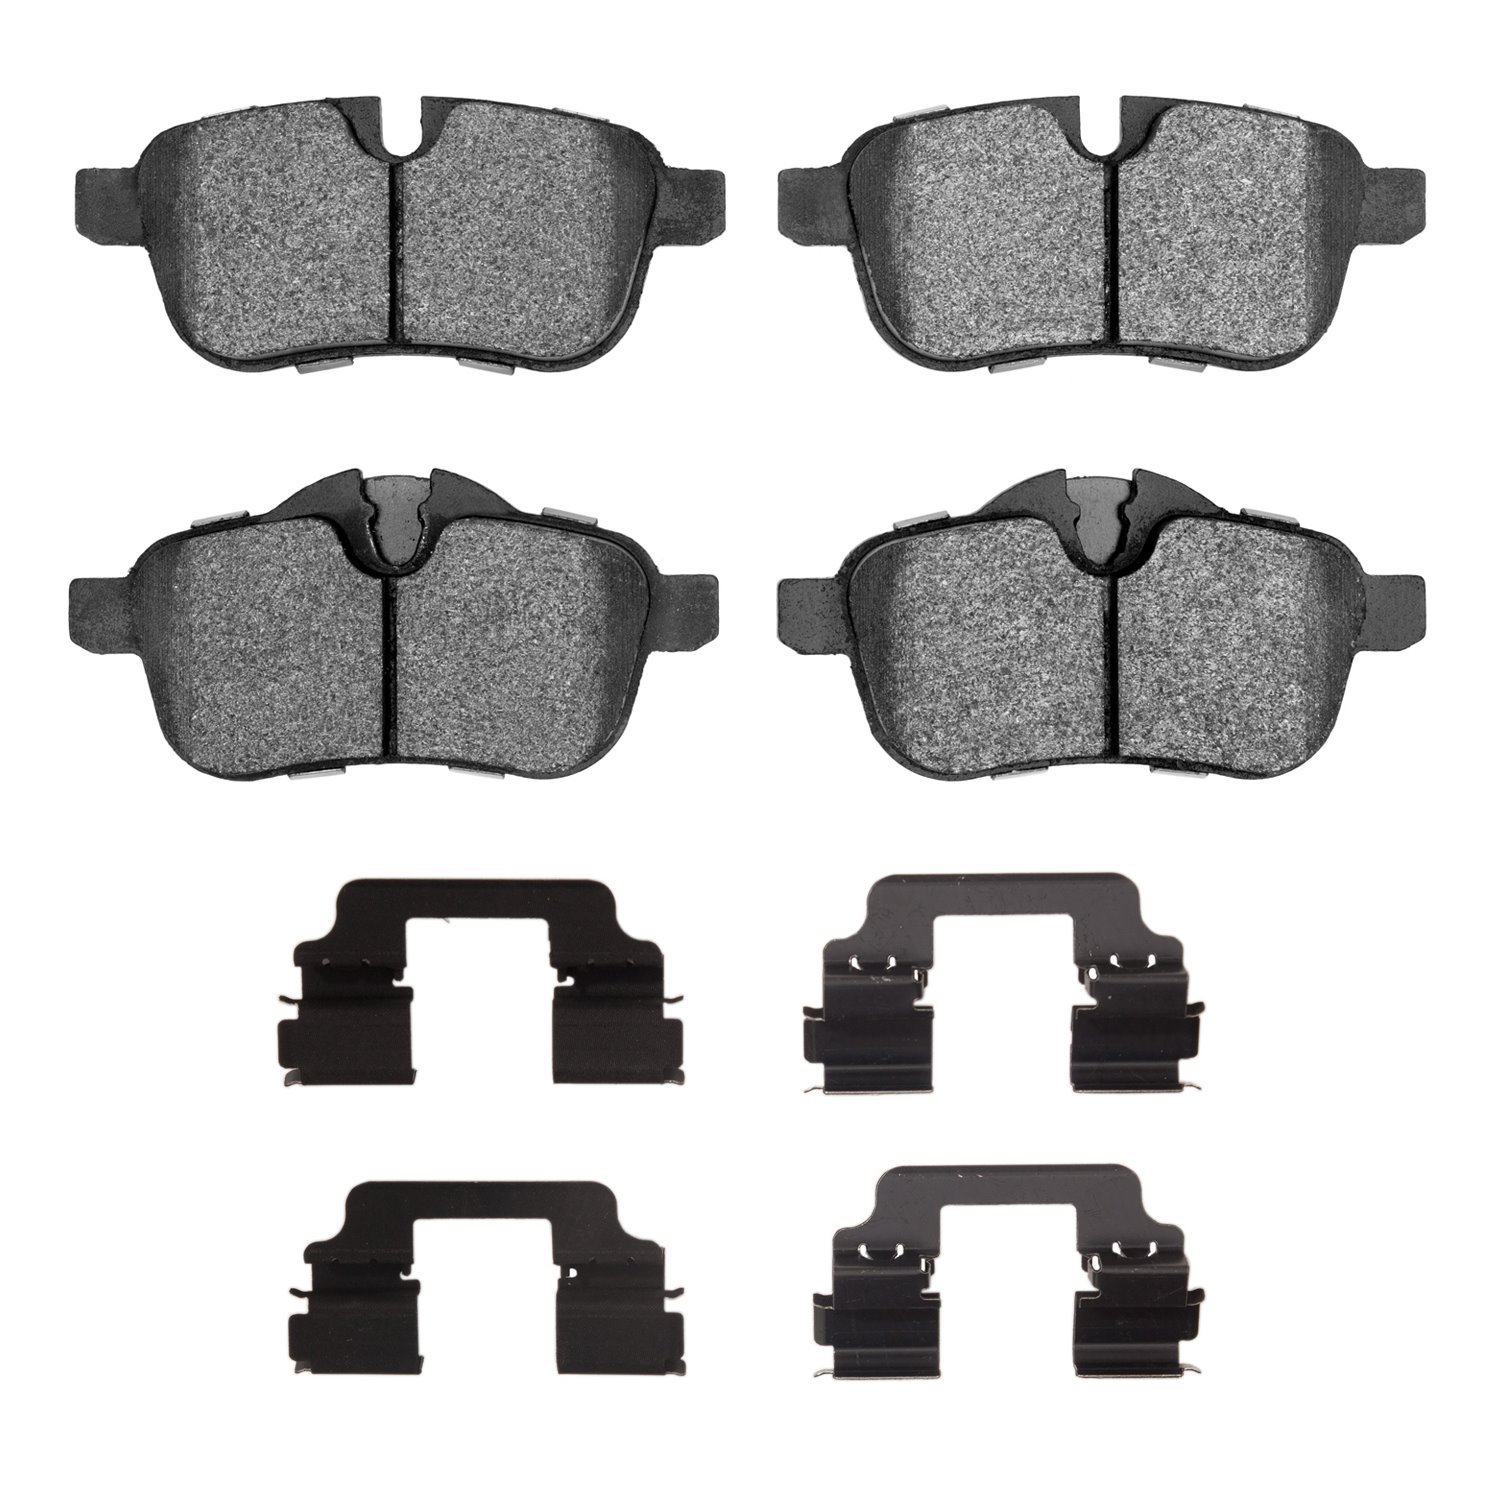 1600-1433-01 5000 Euro Ceramic Brake Pads & Hardware Kit, Fits Select BMW, Position: Rear